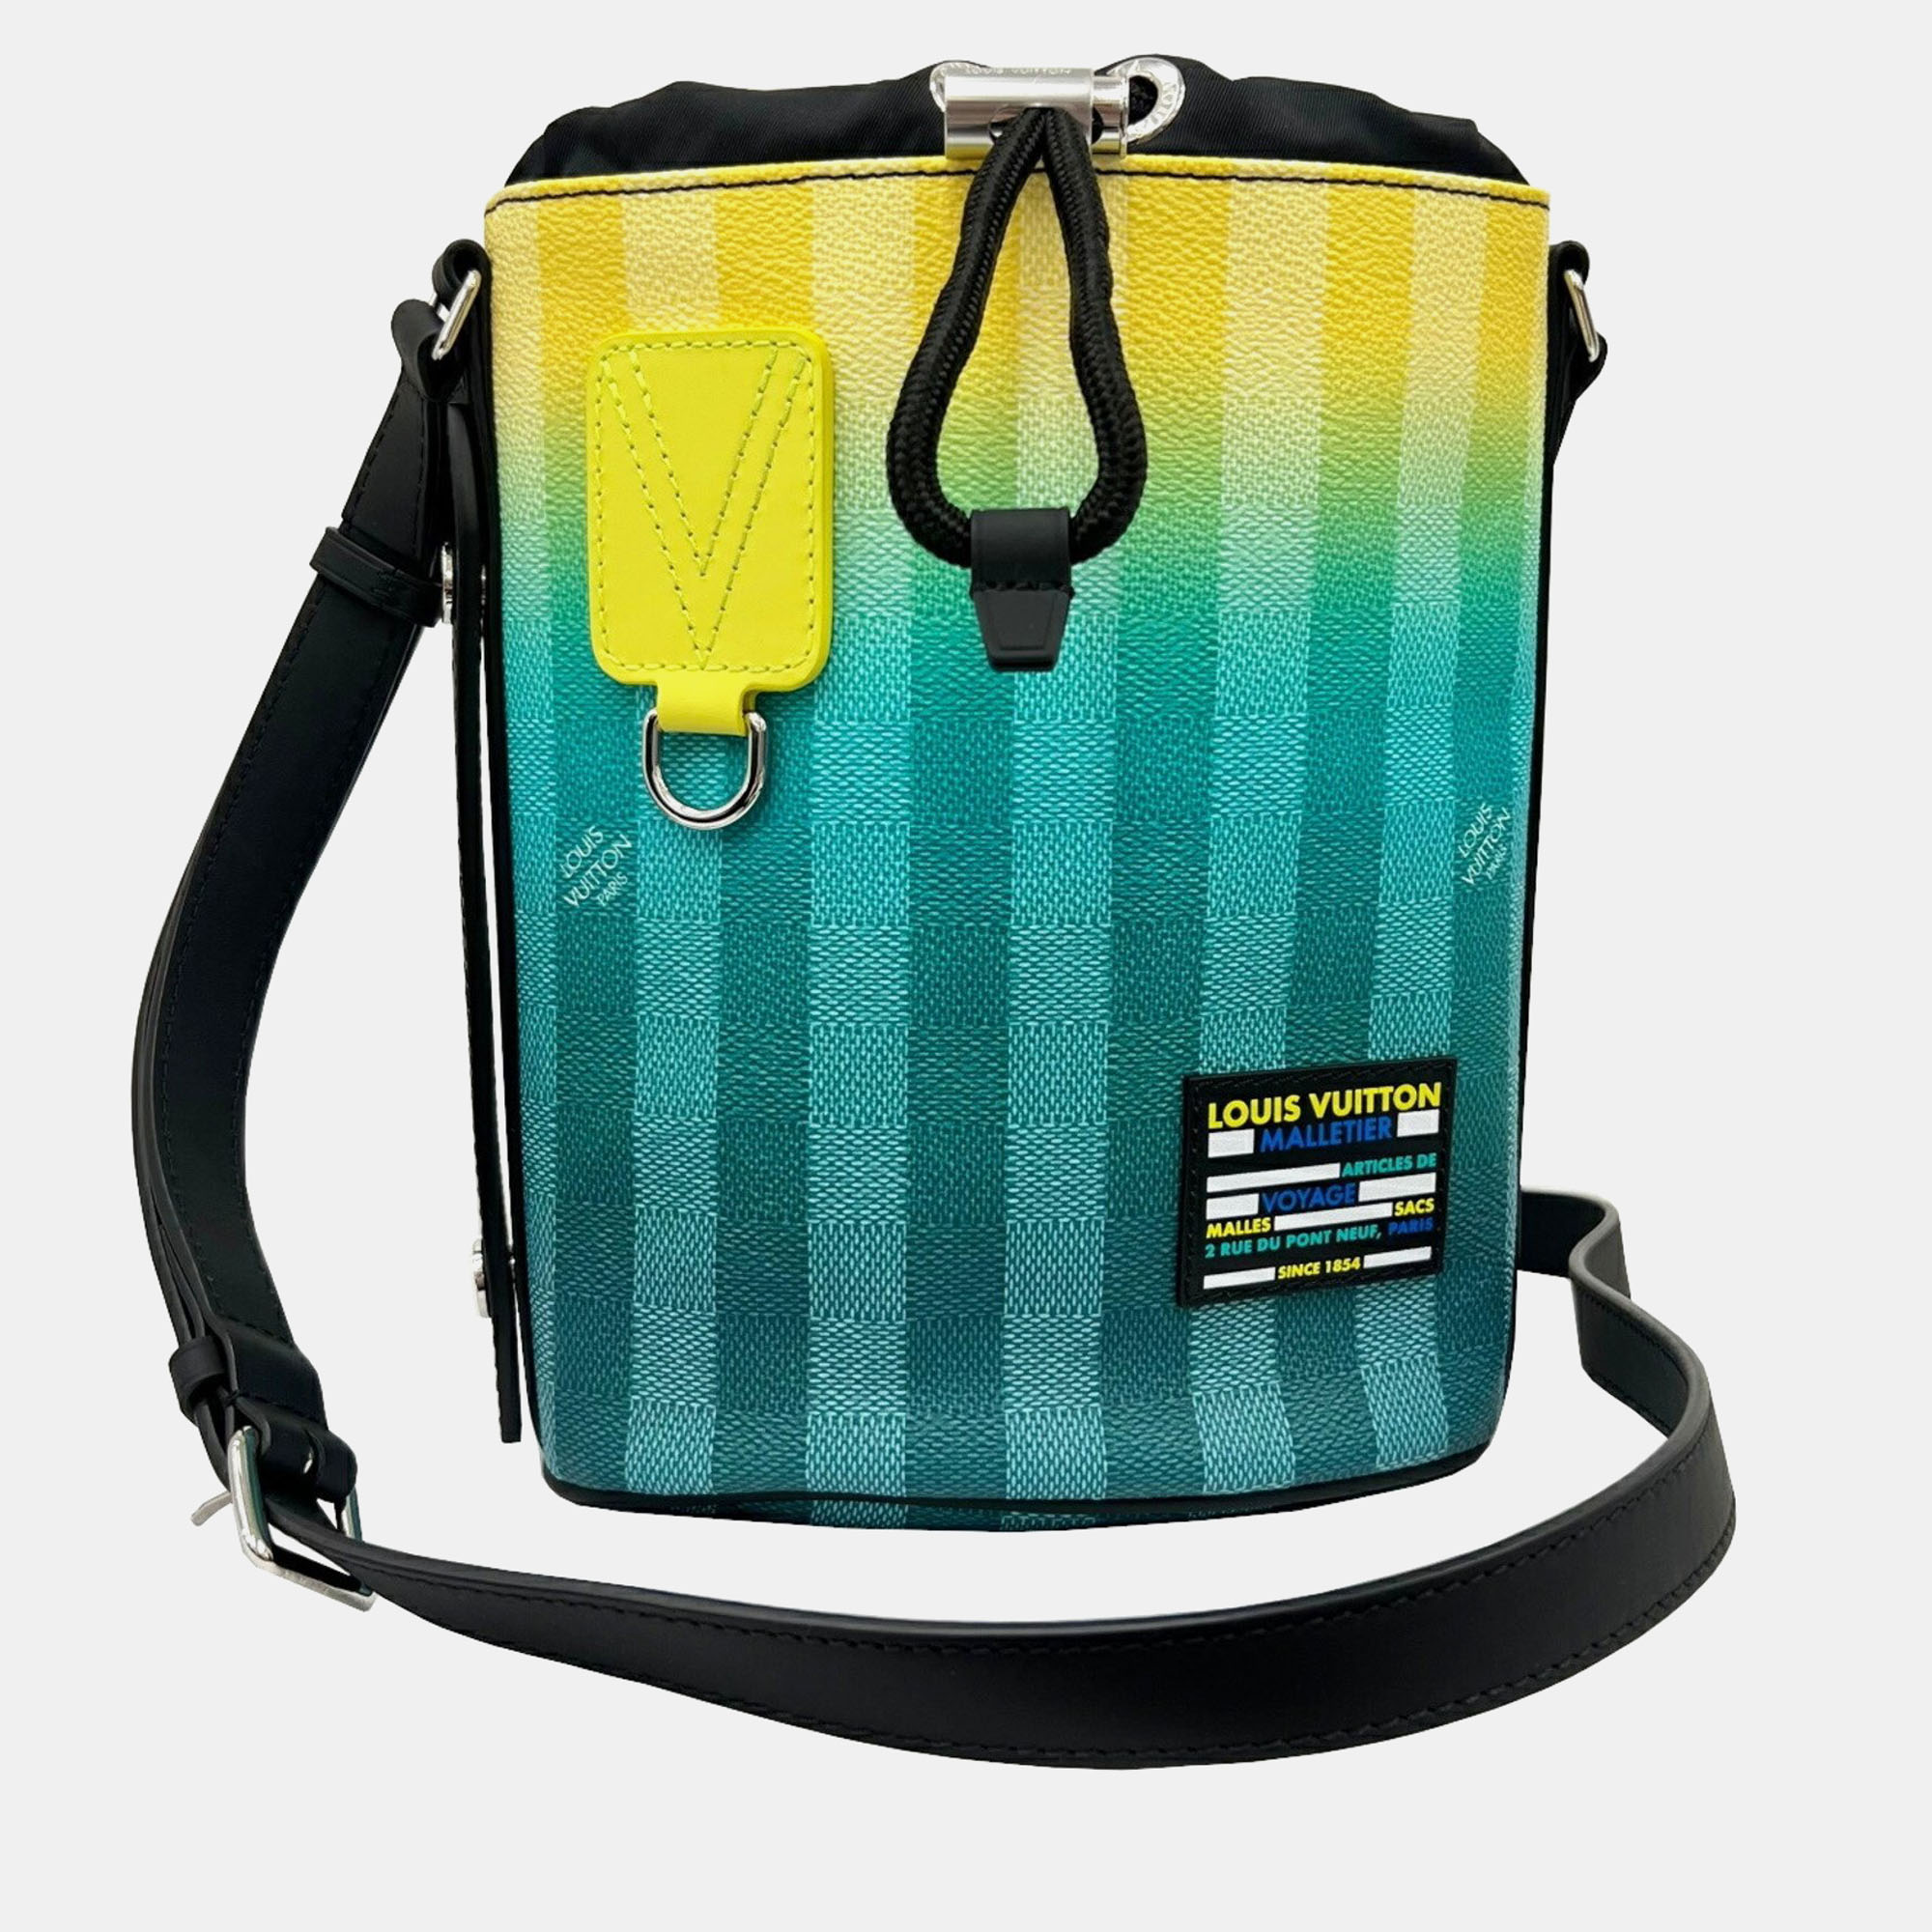 Louis vuitton green/yellow canvas sac marin shoulder bag